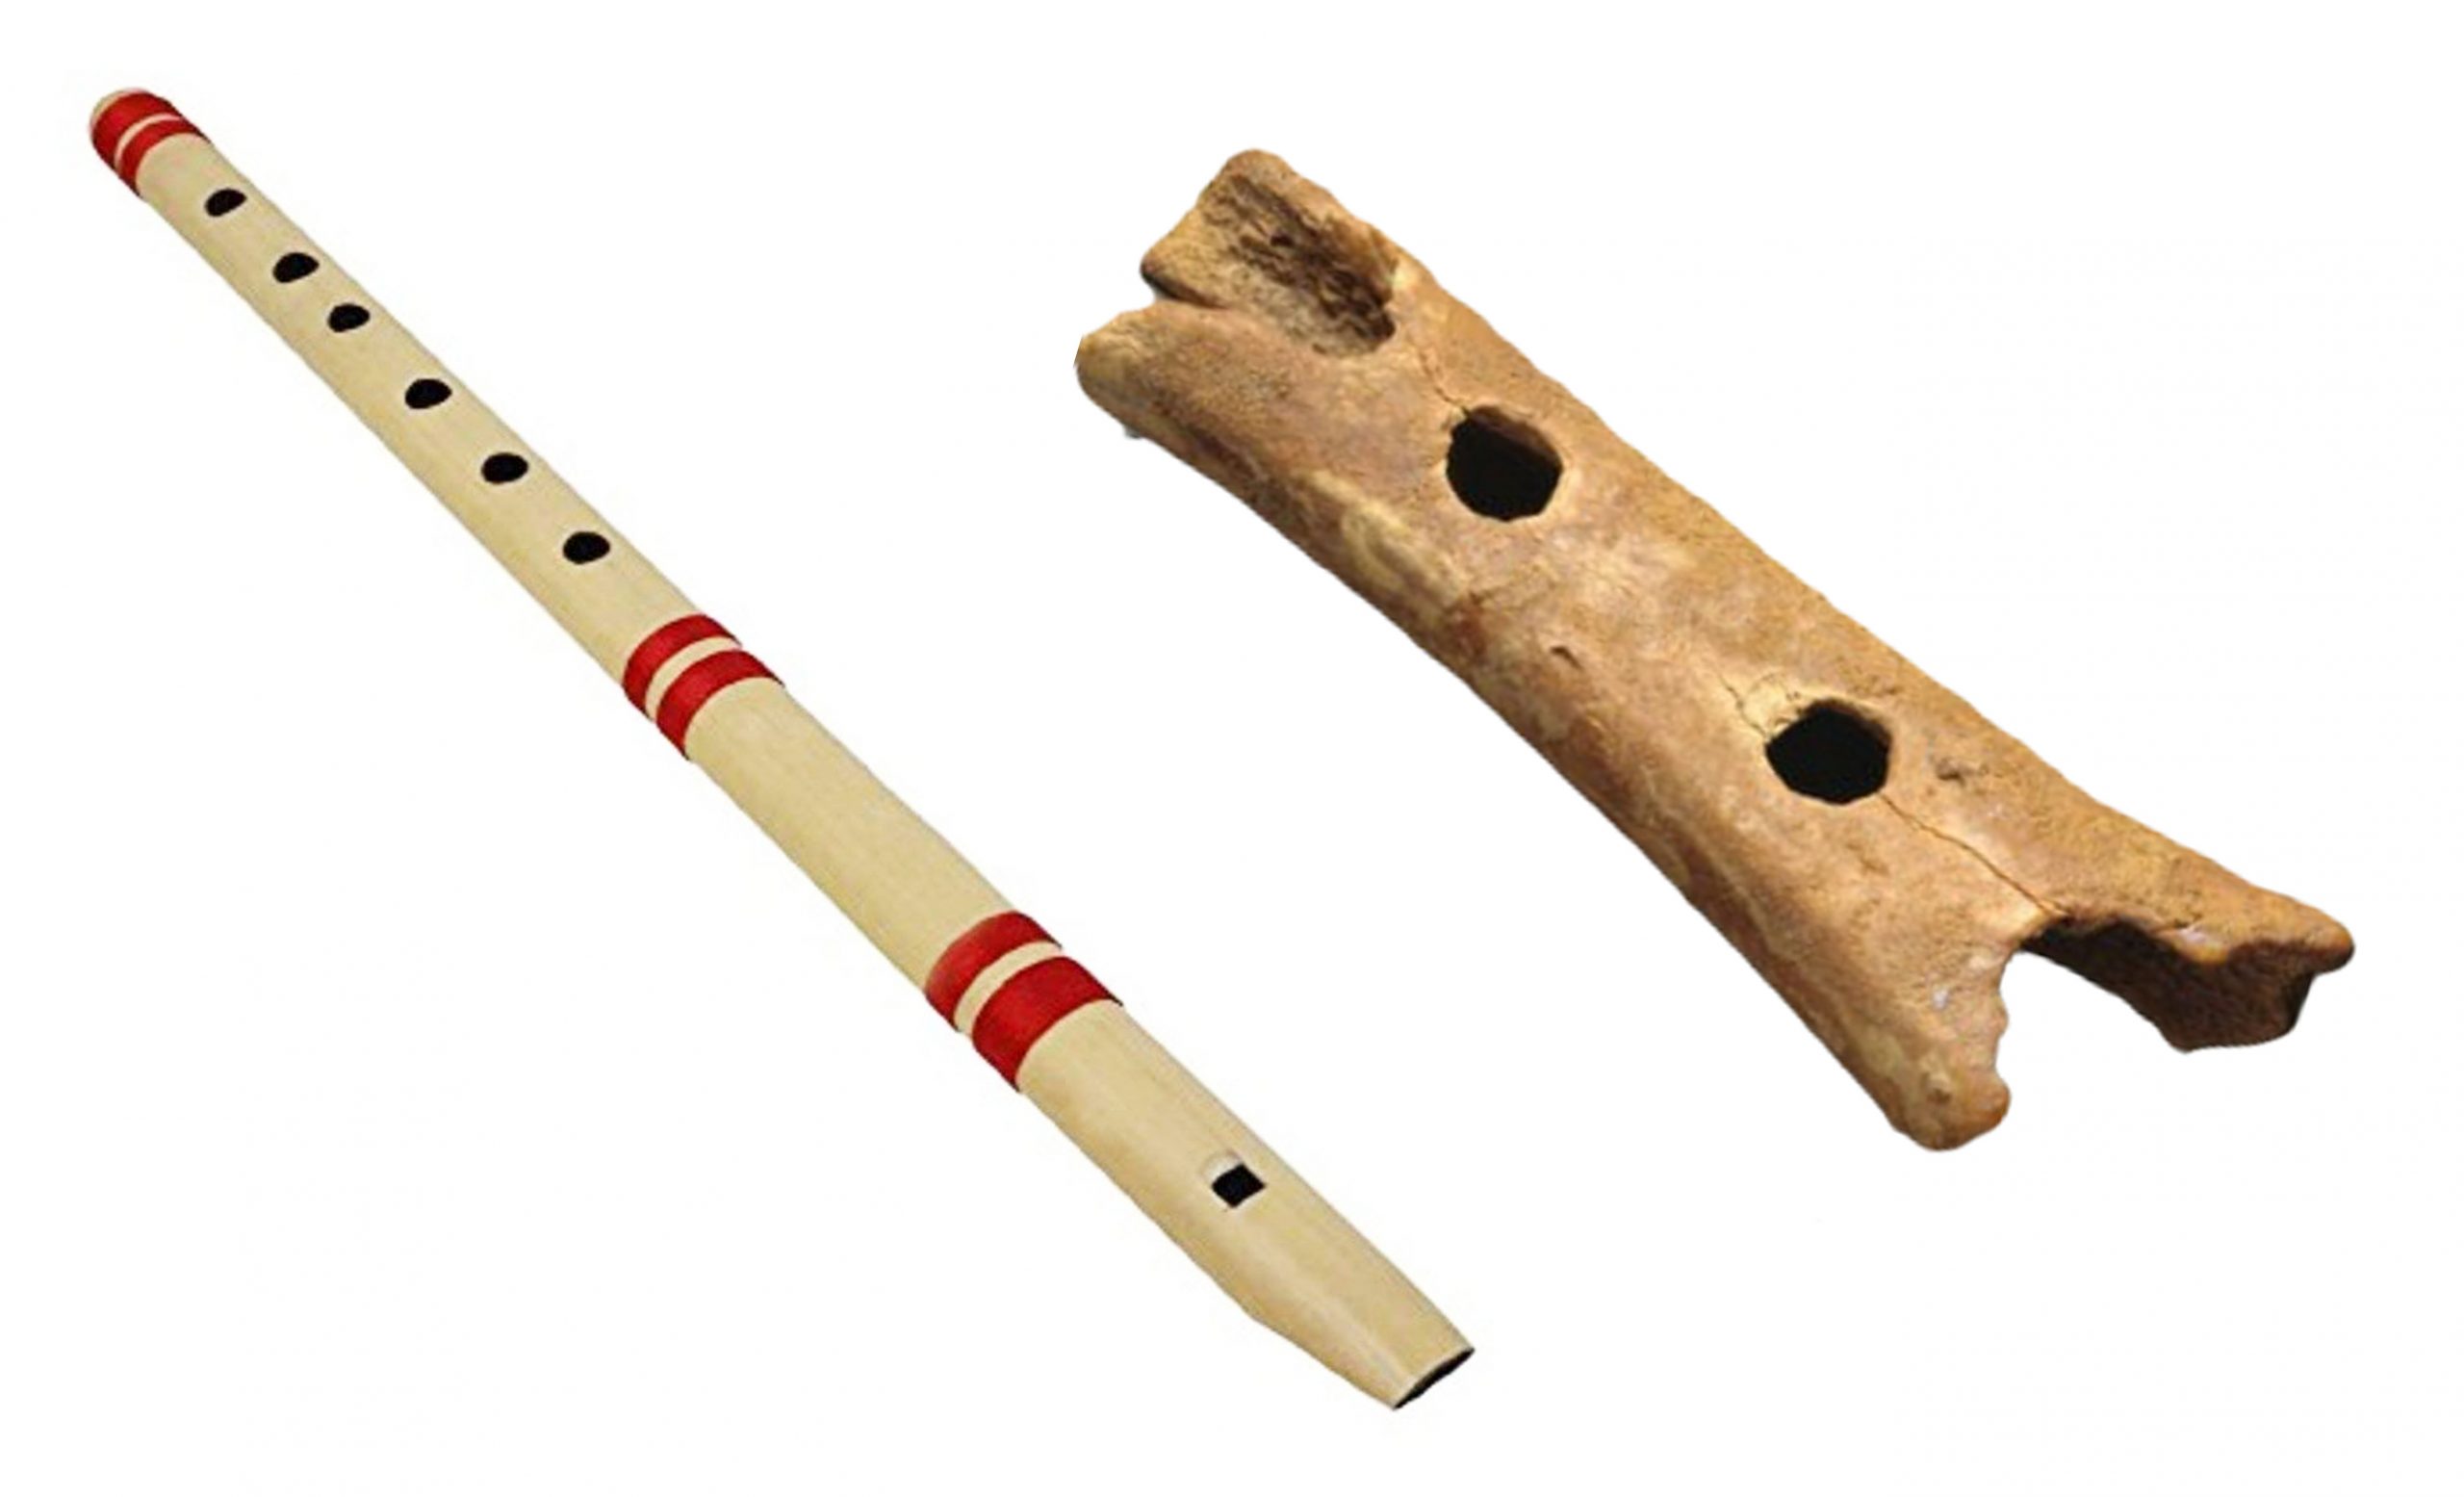 Oldest Musical Instrument